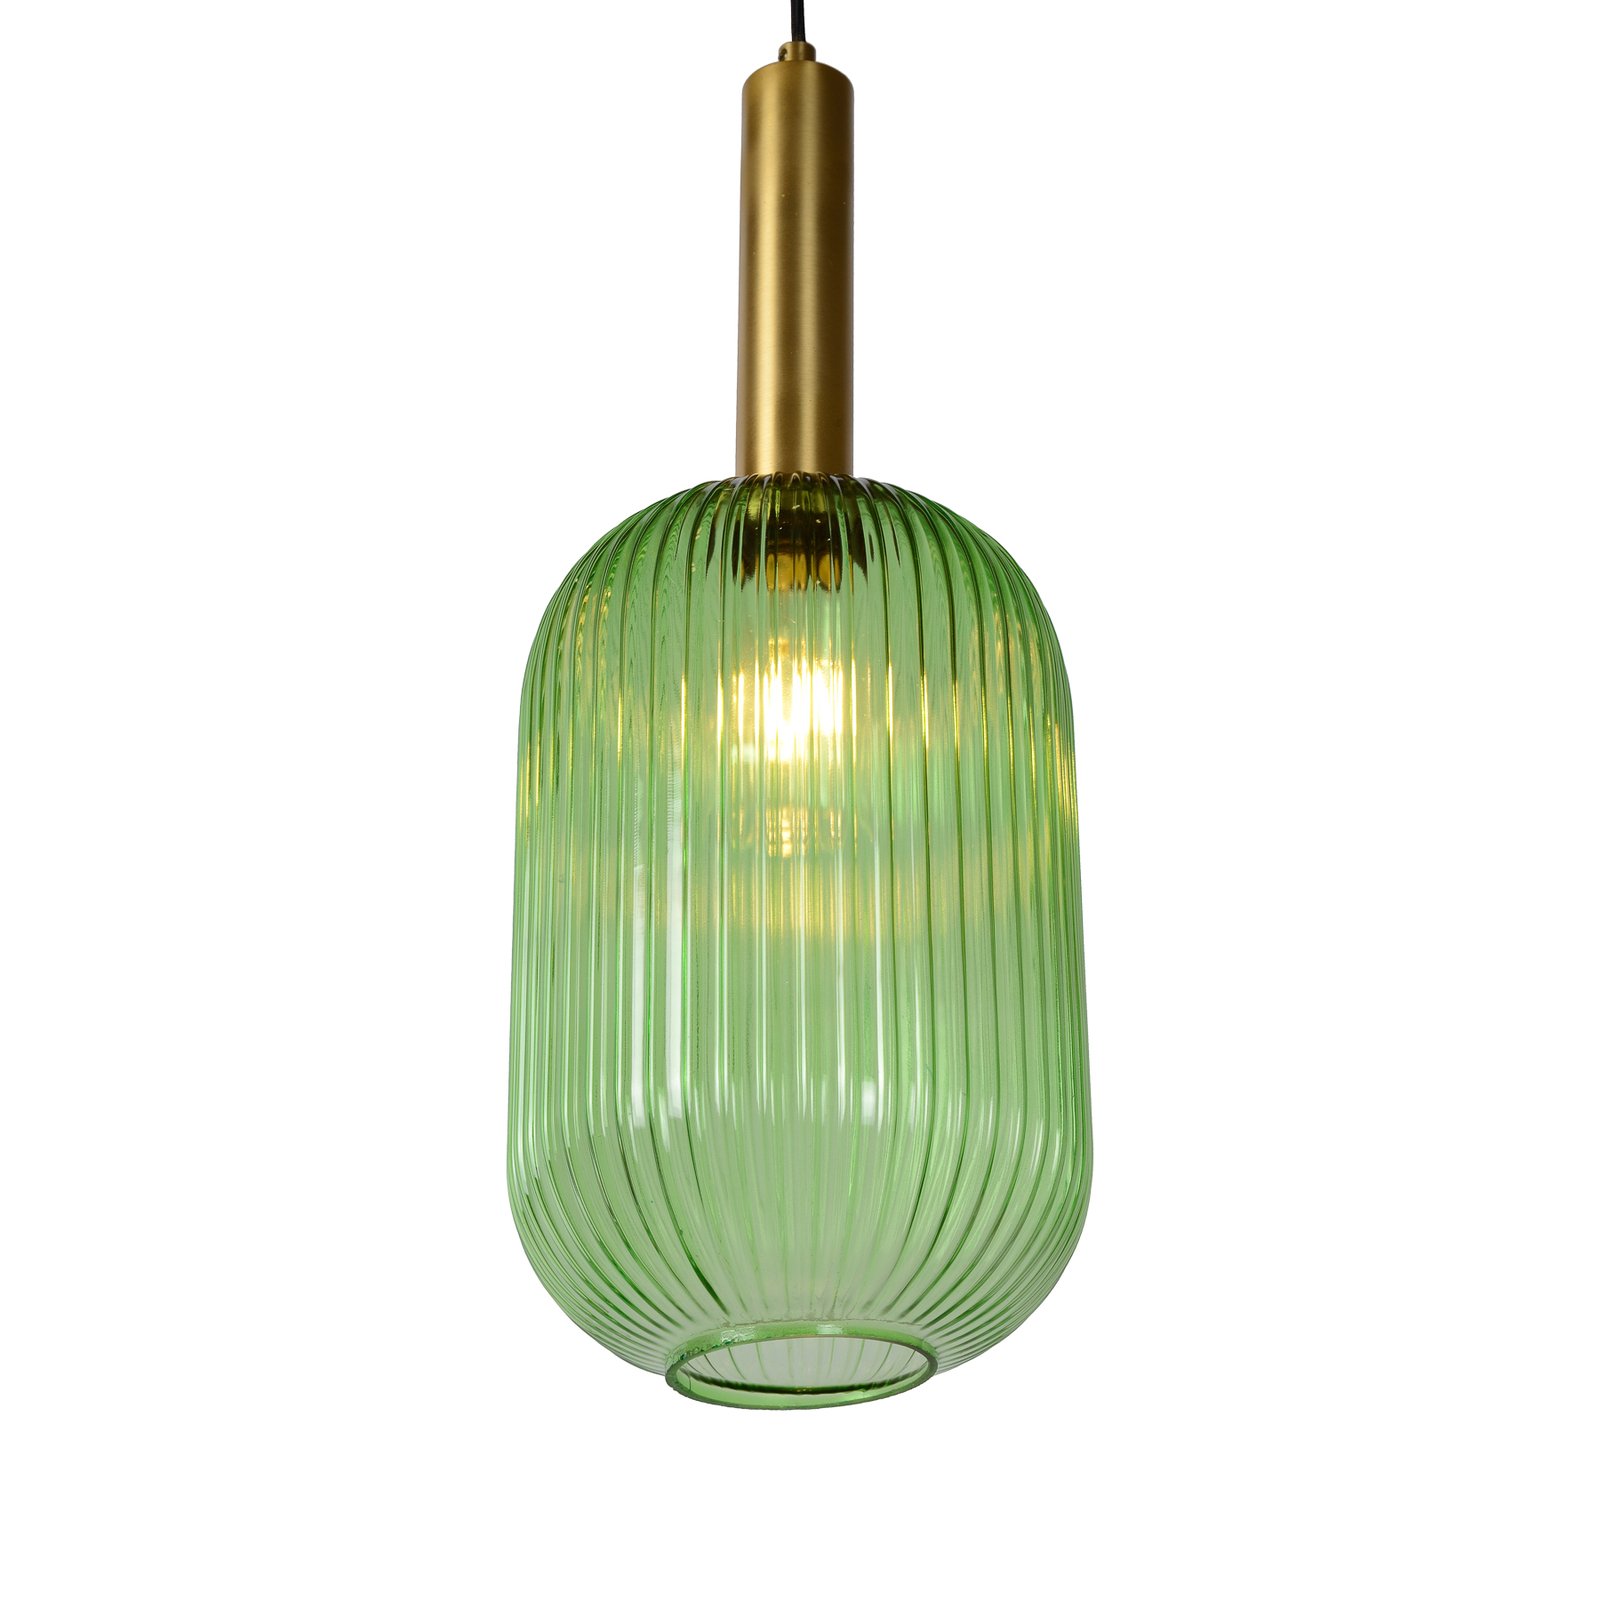 Maloto glass pendant light, Ø 20 cm, green